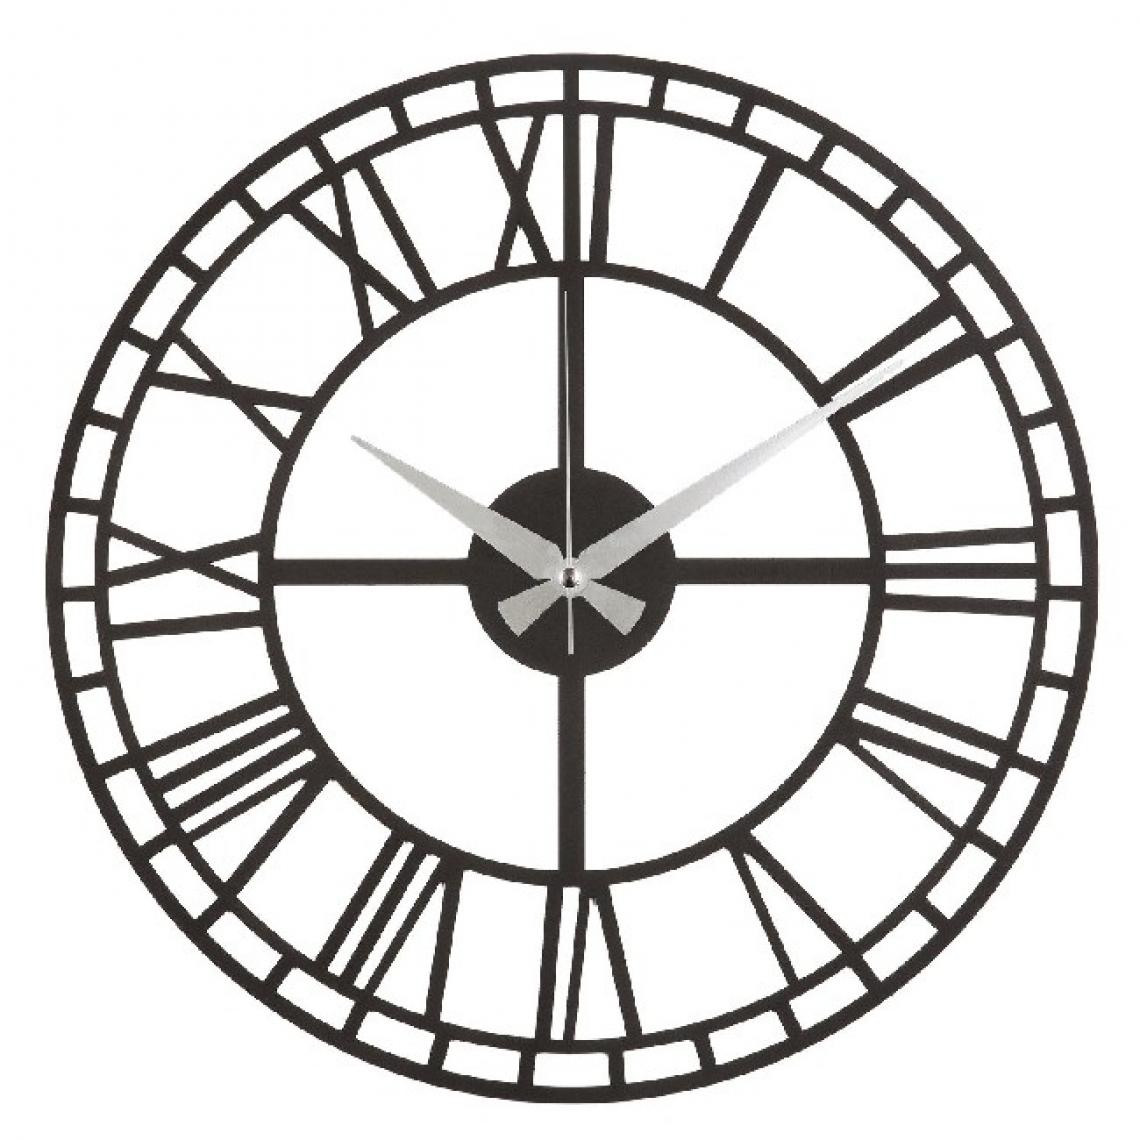 Homemania - HOMEMANIA Horloge Wall - Noir - 50 x 0,2 x 50 cm - Horloges, pendules